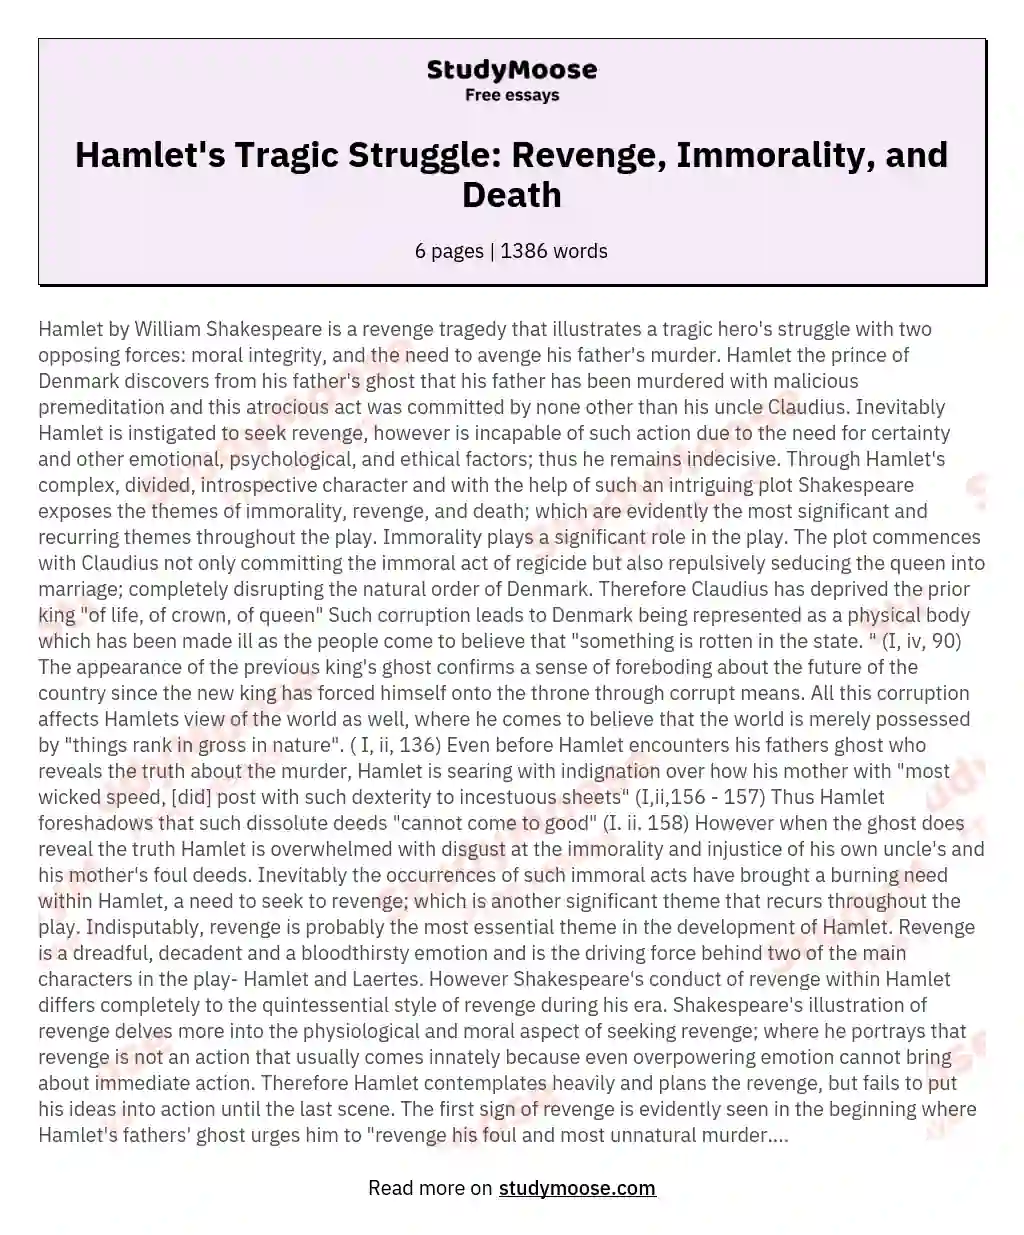 Hamlet's Tragic Struggle: Revenge, Immorality, and Death essay